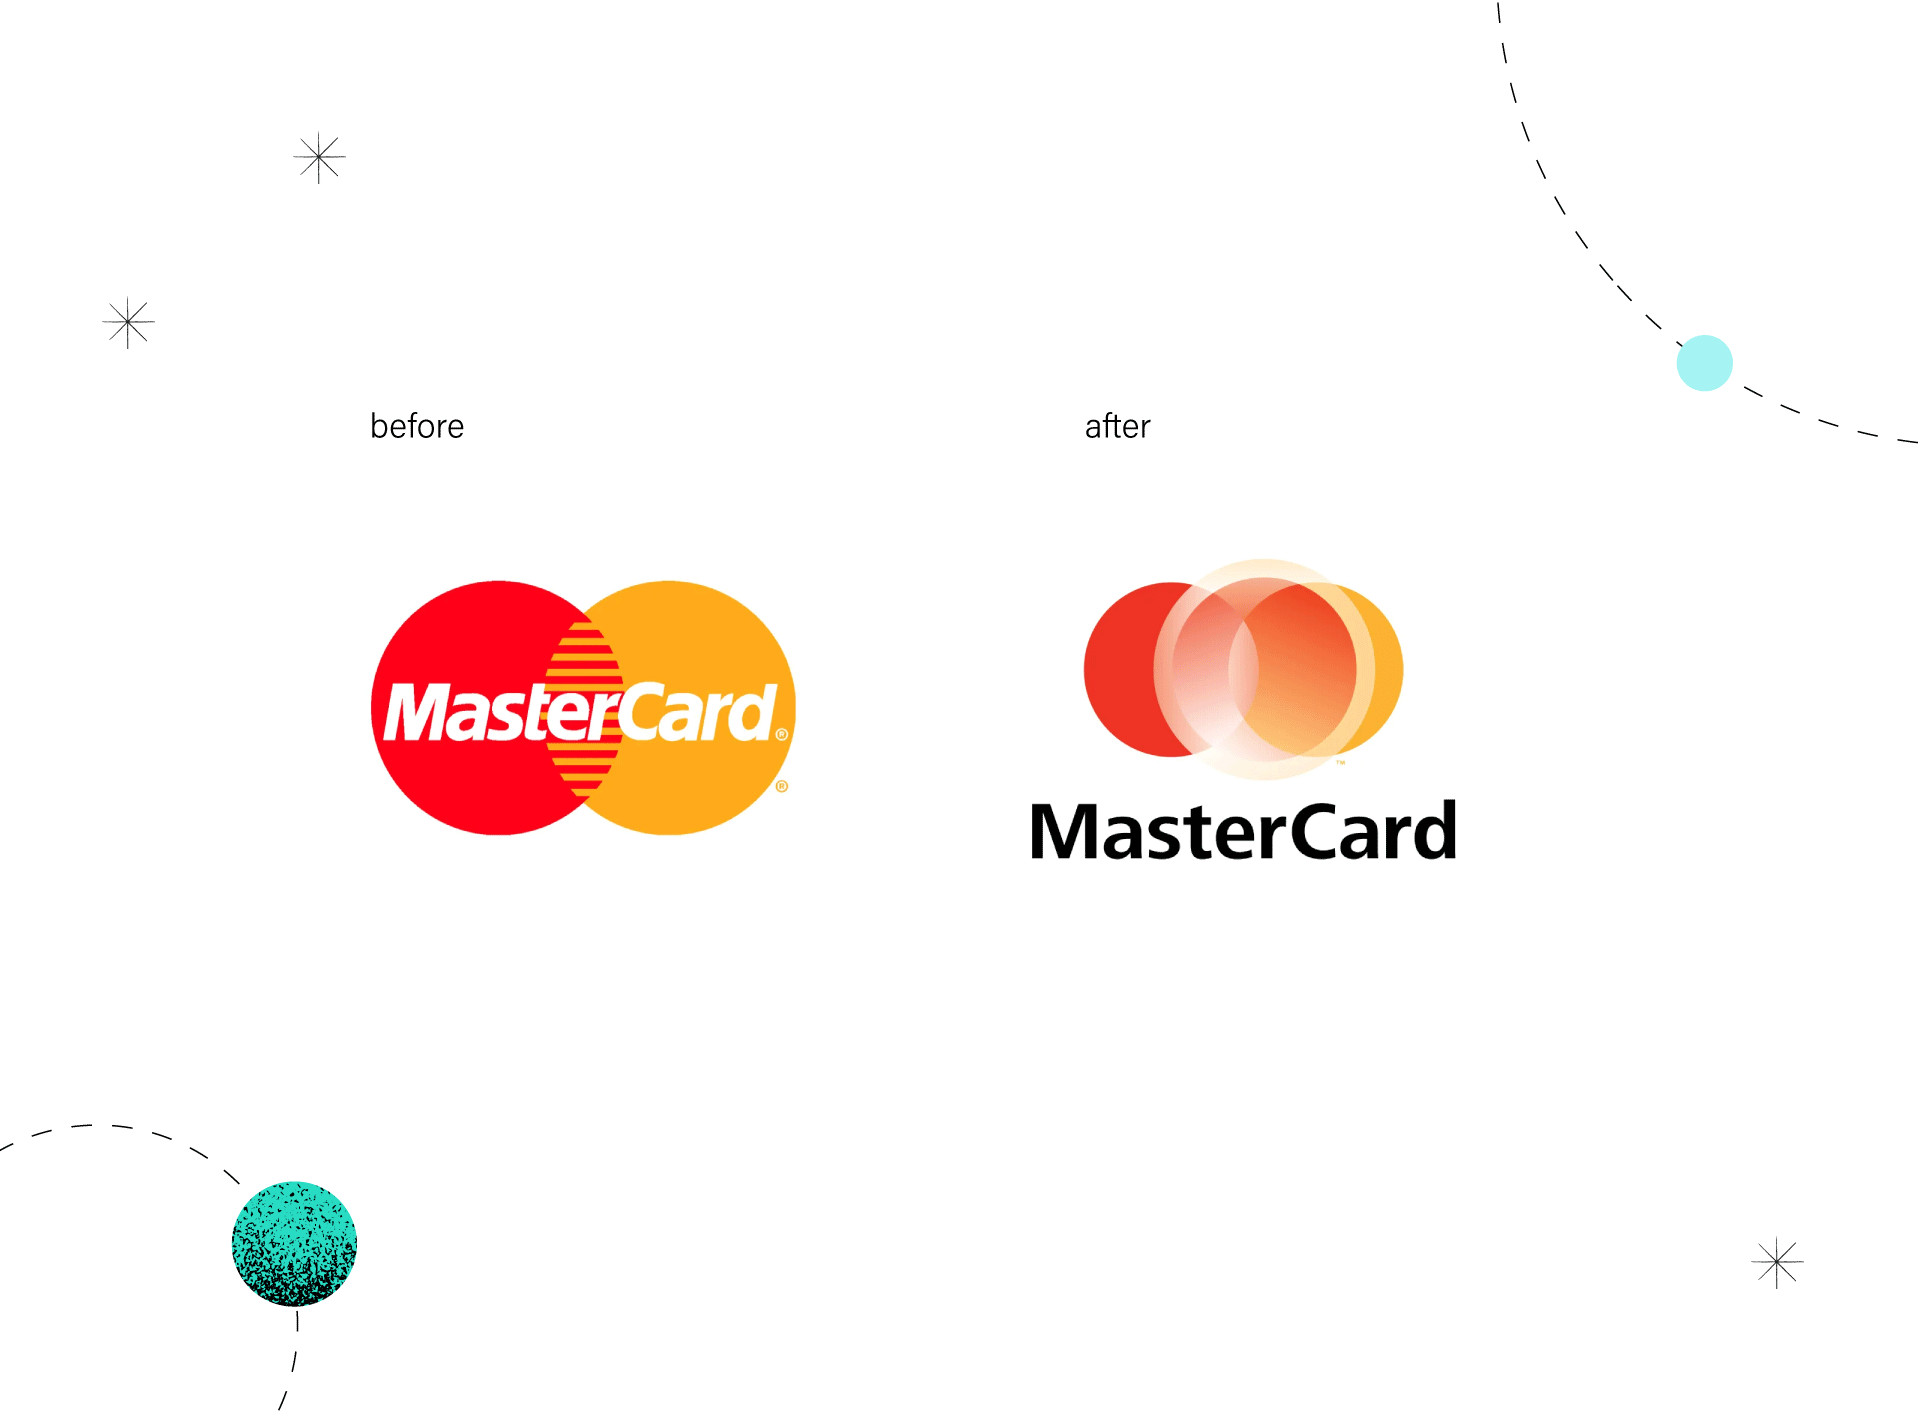 mastercard - examples of unsuccessful rebranding